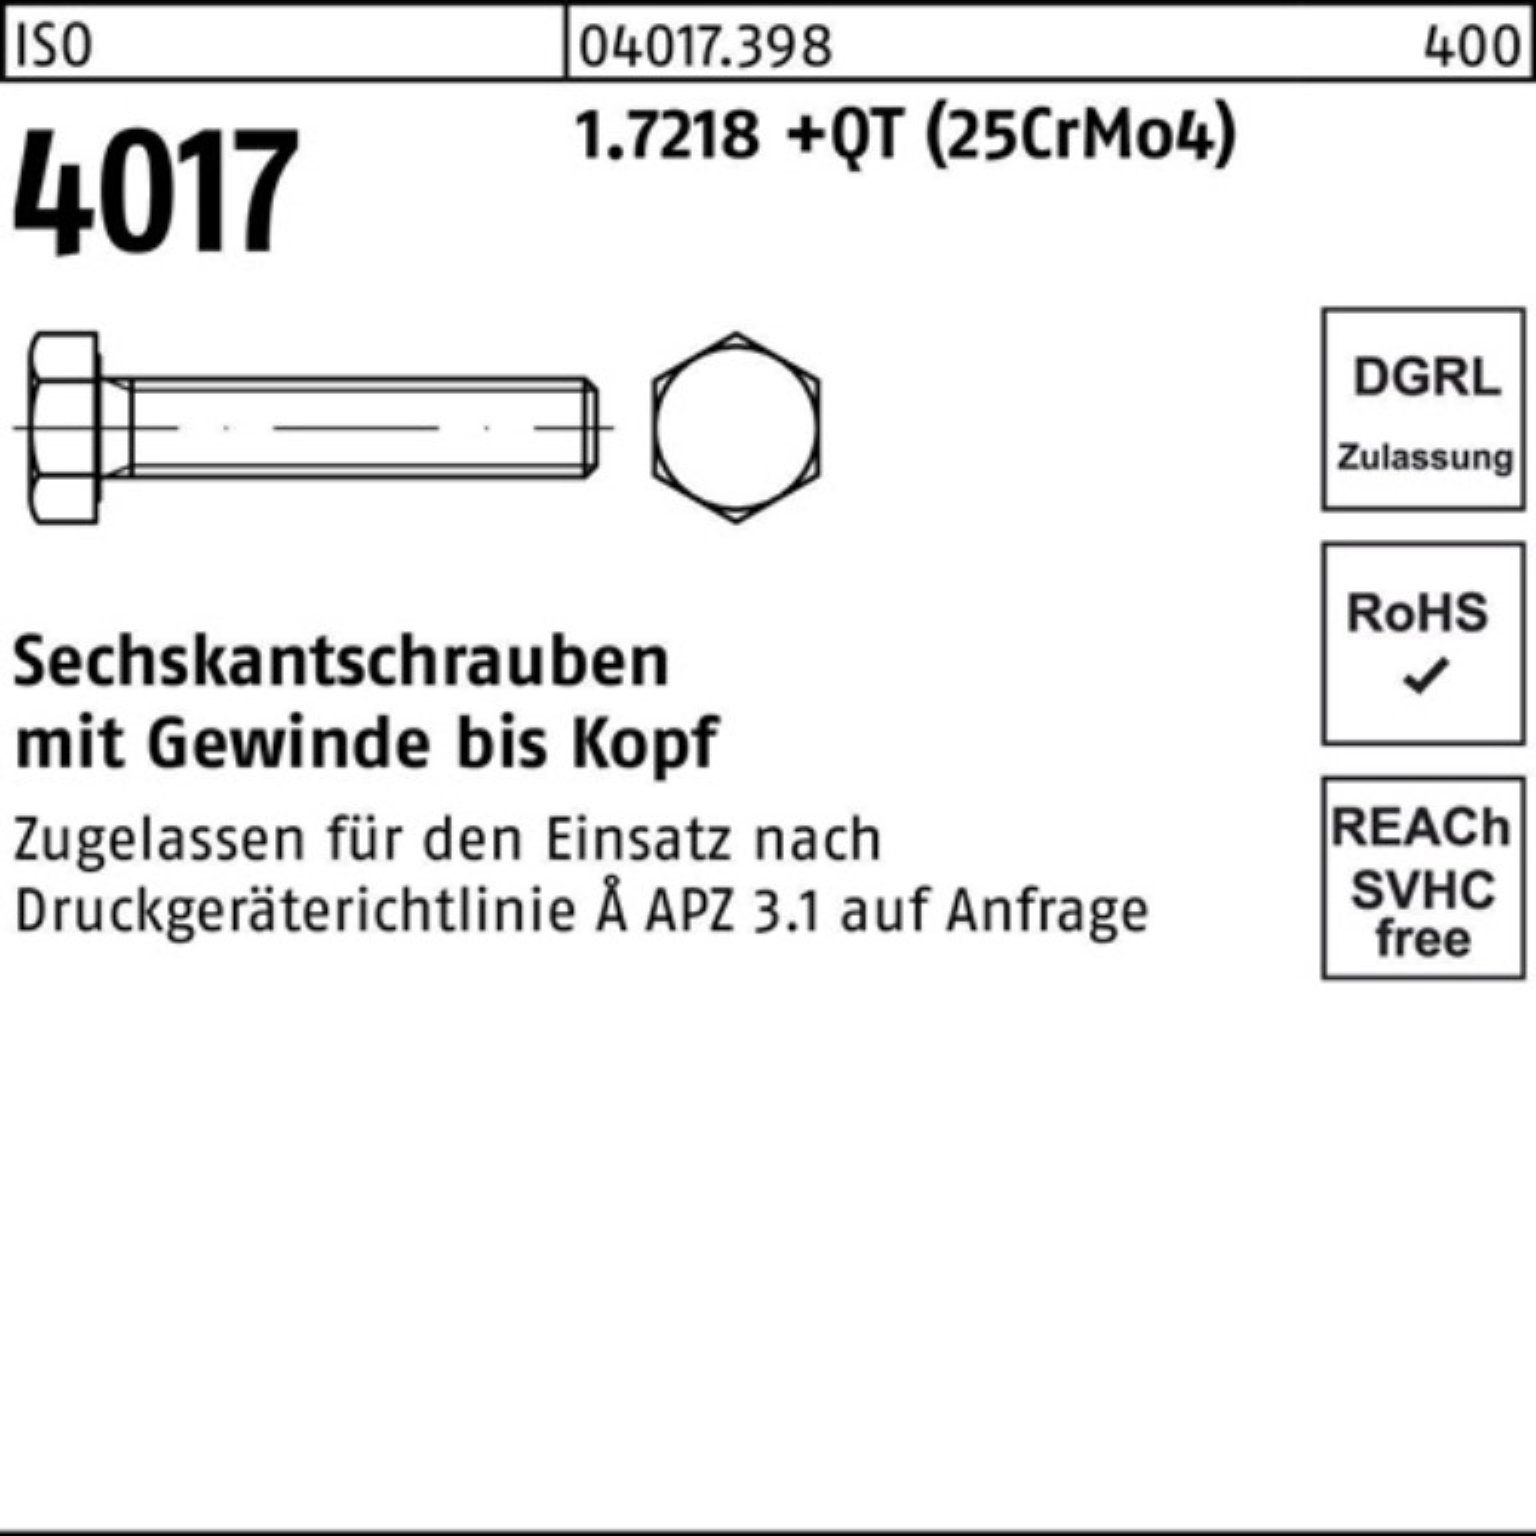 1.7218 Sechskantschraube 40 Pack ISO VG 100er Sechskantschraube +QT (25CrMo4) Bufab M12x 4017